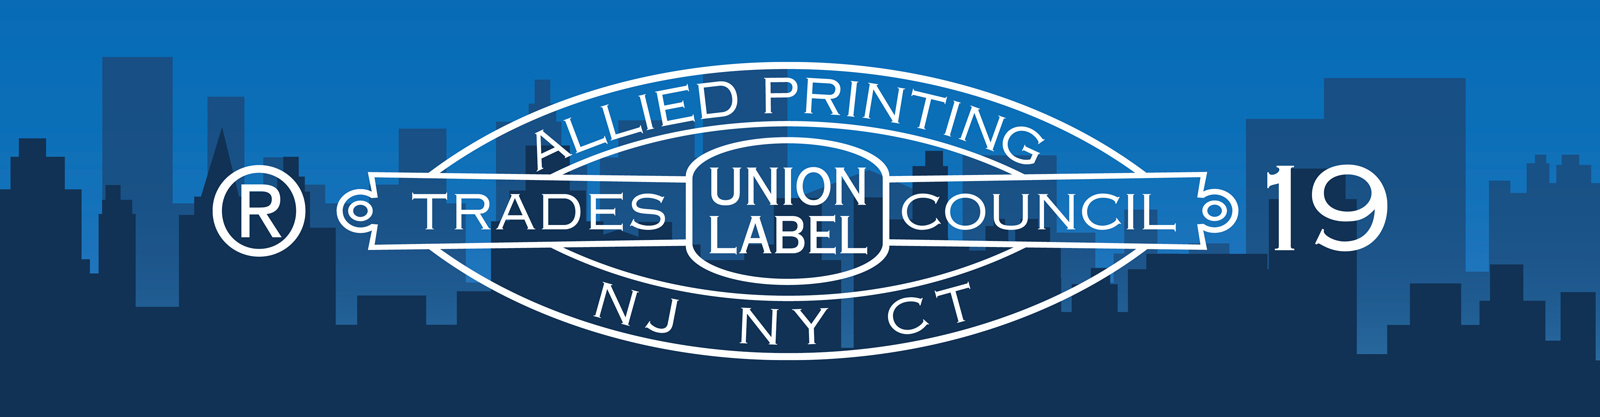 Union Printer Bug Nj Union Label